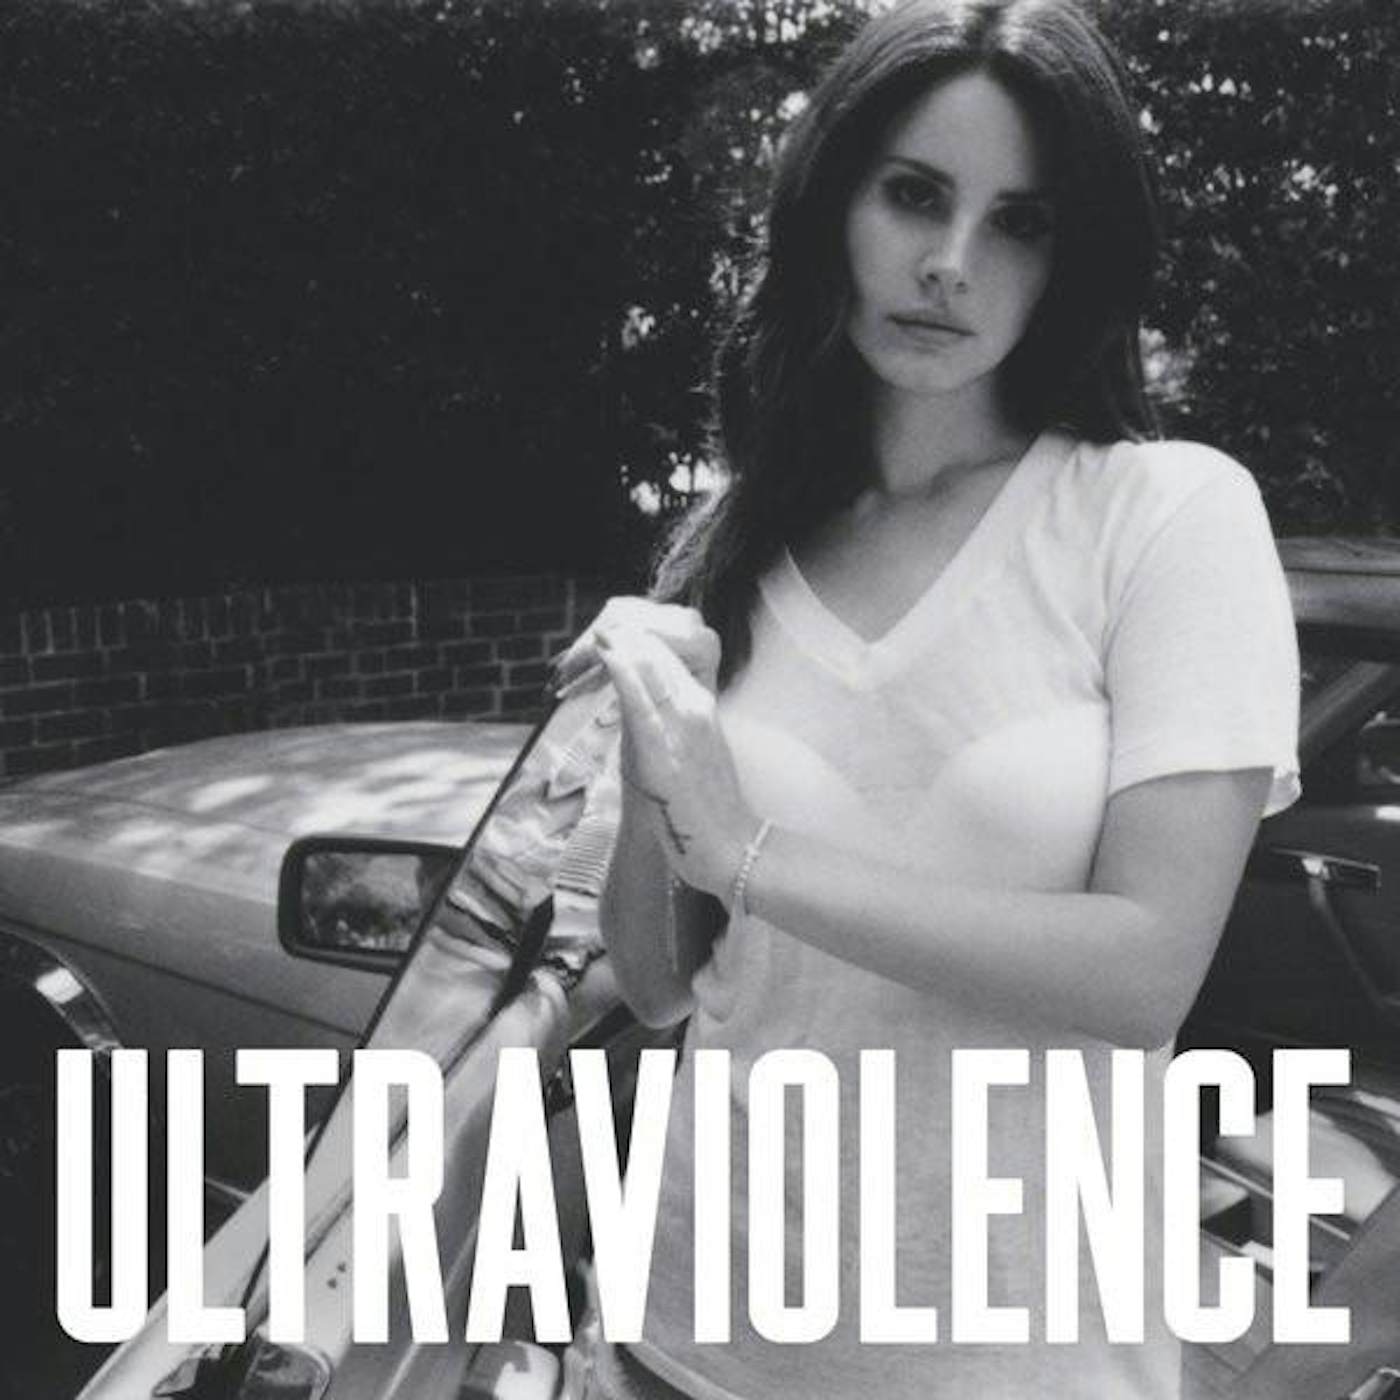 Lana Del Rey ULTRAVIOLENCE CD